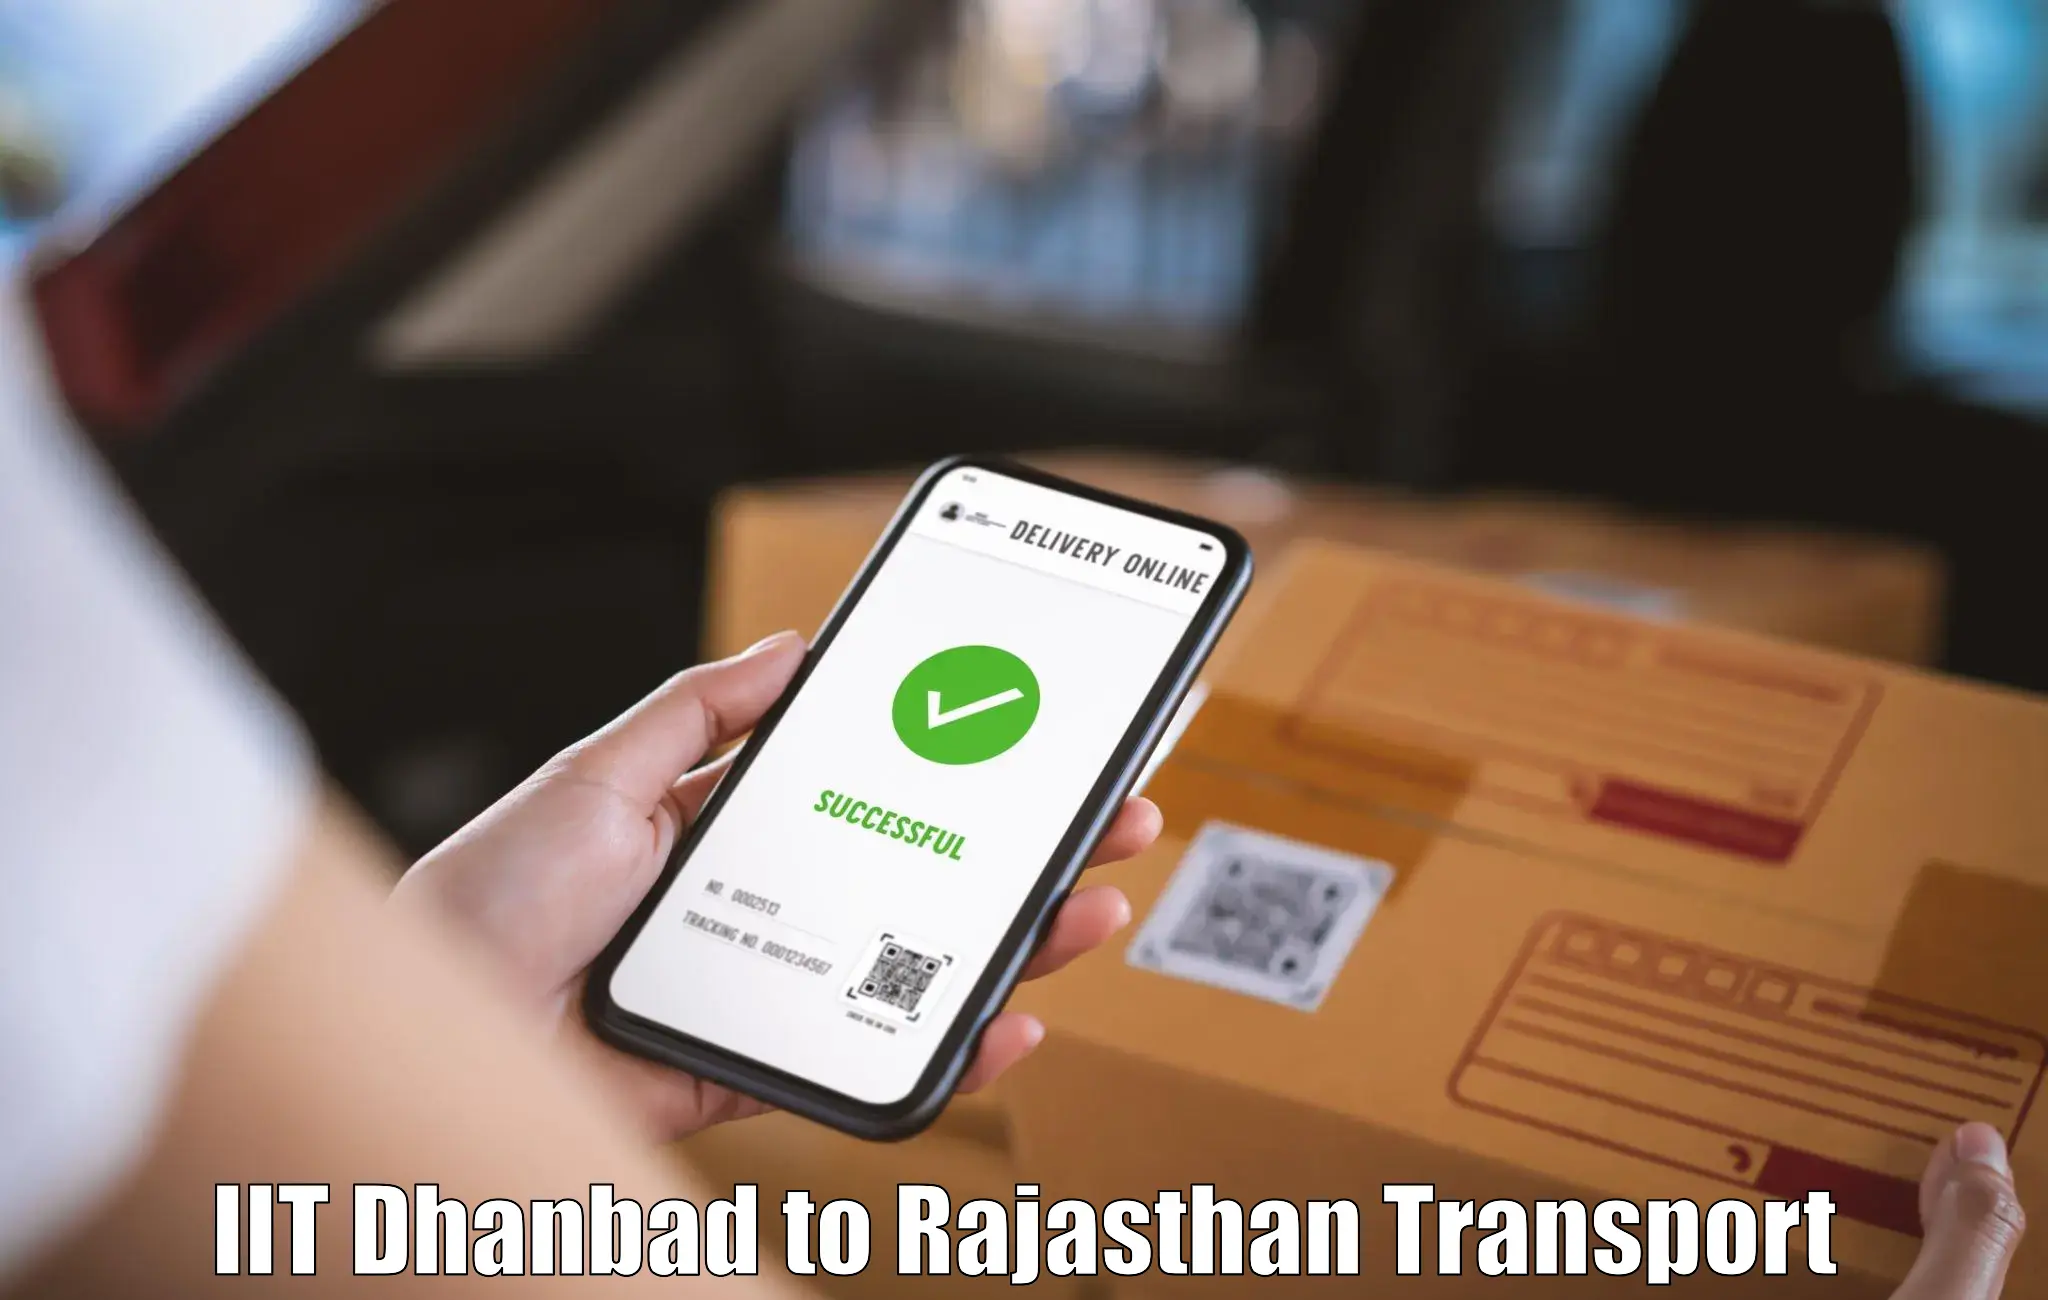 Pick up transport service IIT Dhanbad to Merta